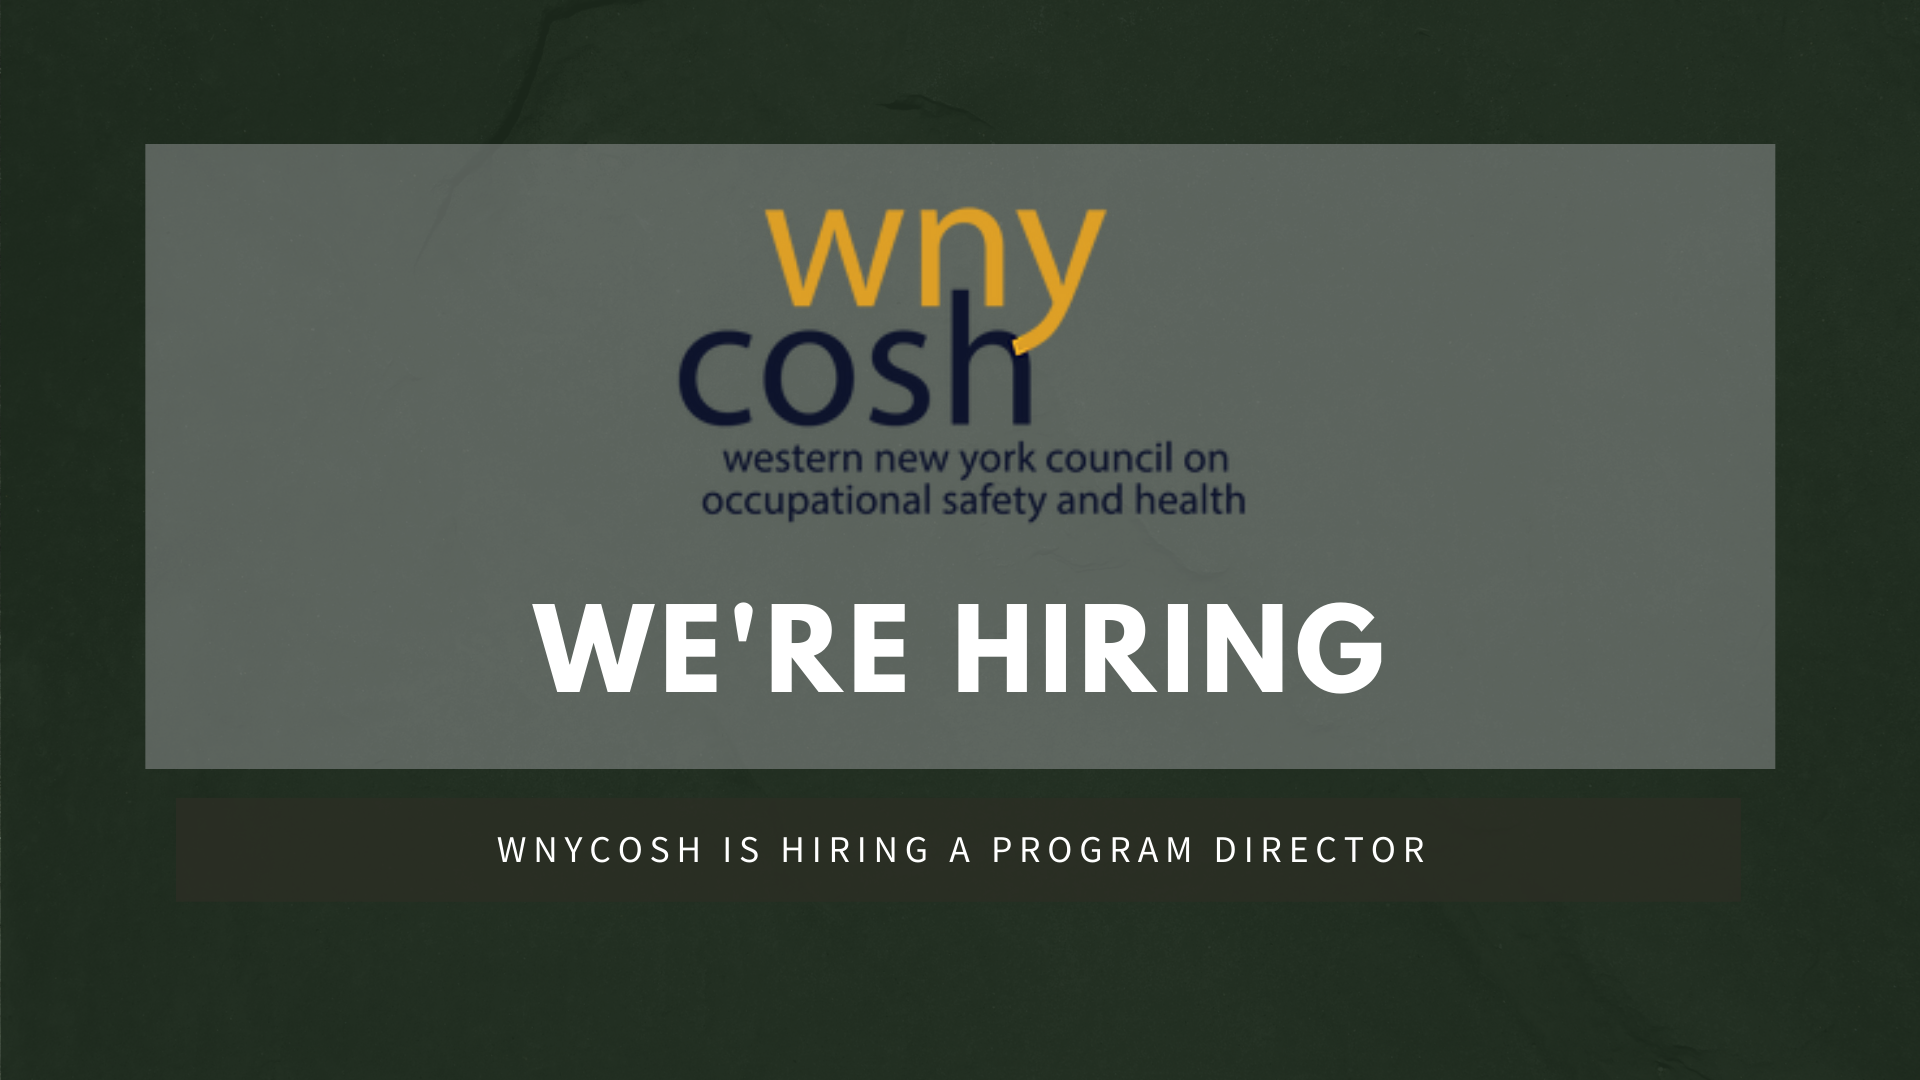 Image announcing WNYCOSH is hiring